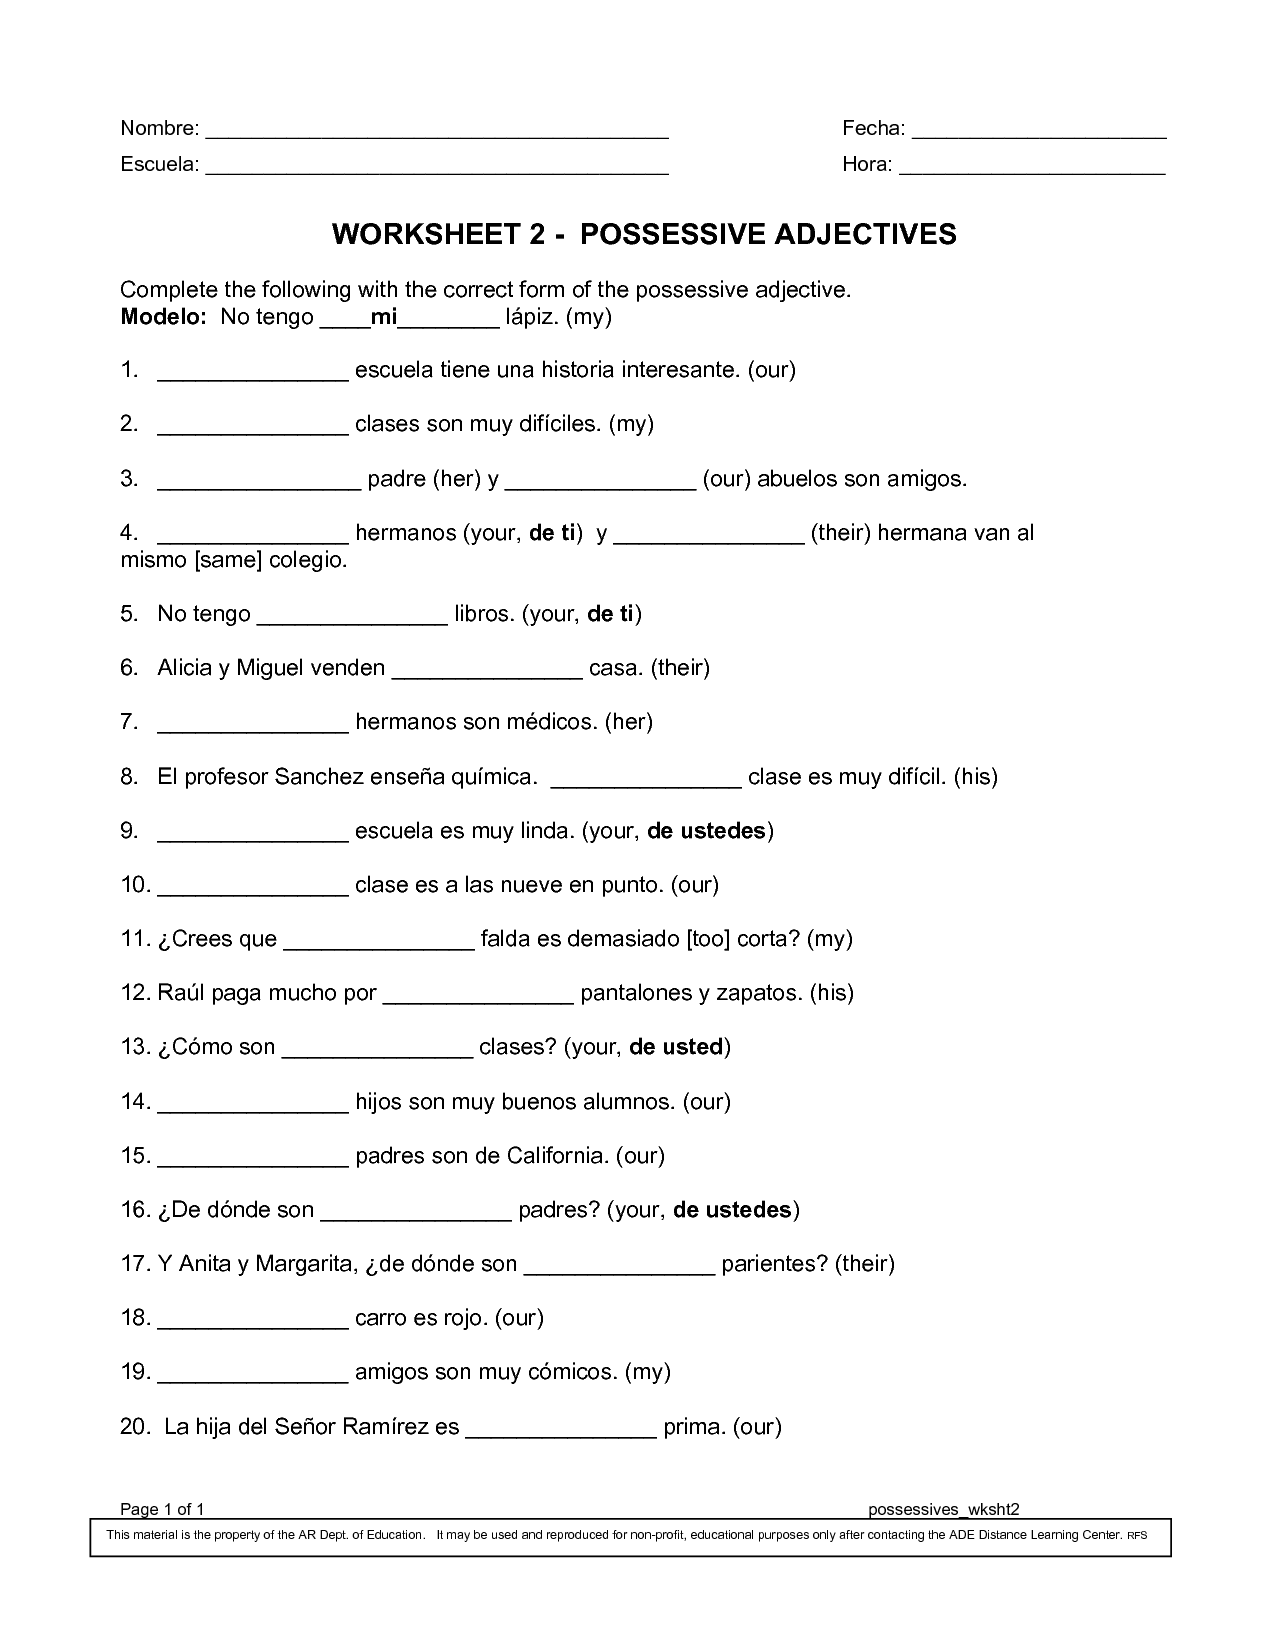 possessive-adjectives-vs-possessive-pronouns-esl-worksheet-by-montecristo-possessive